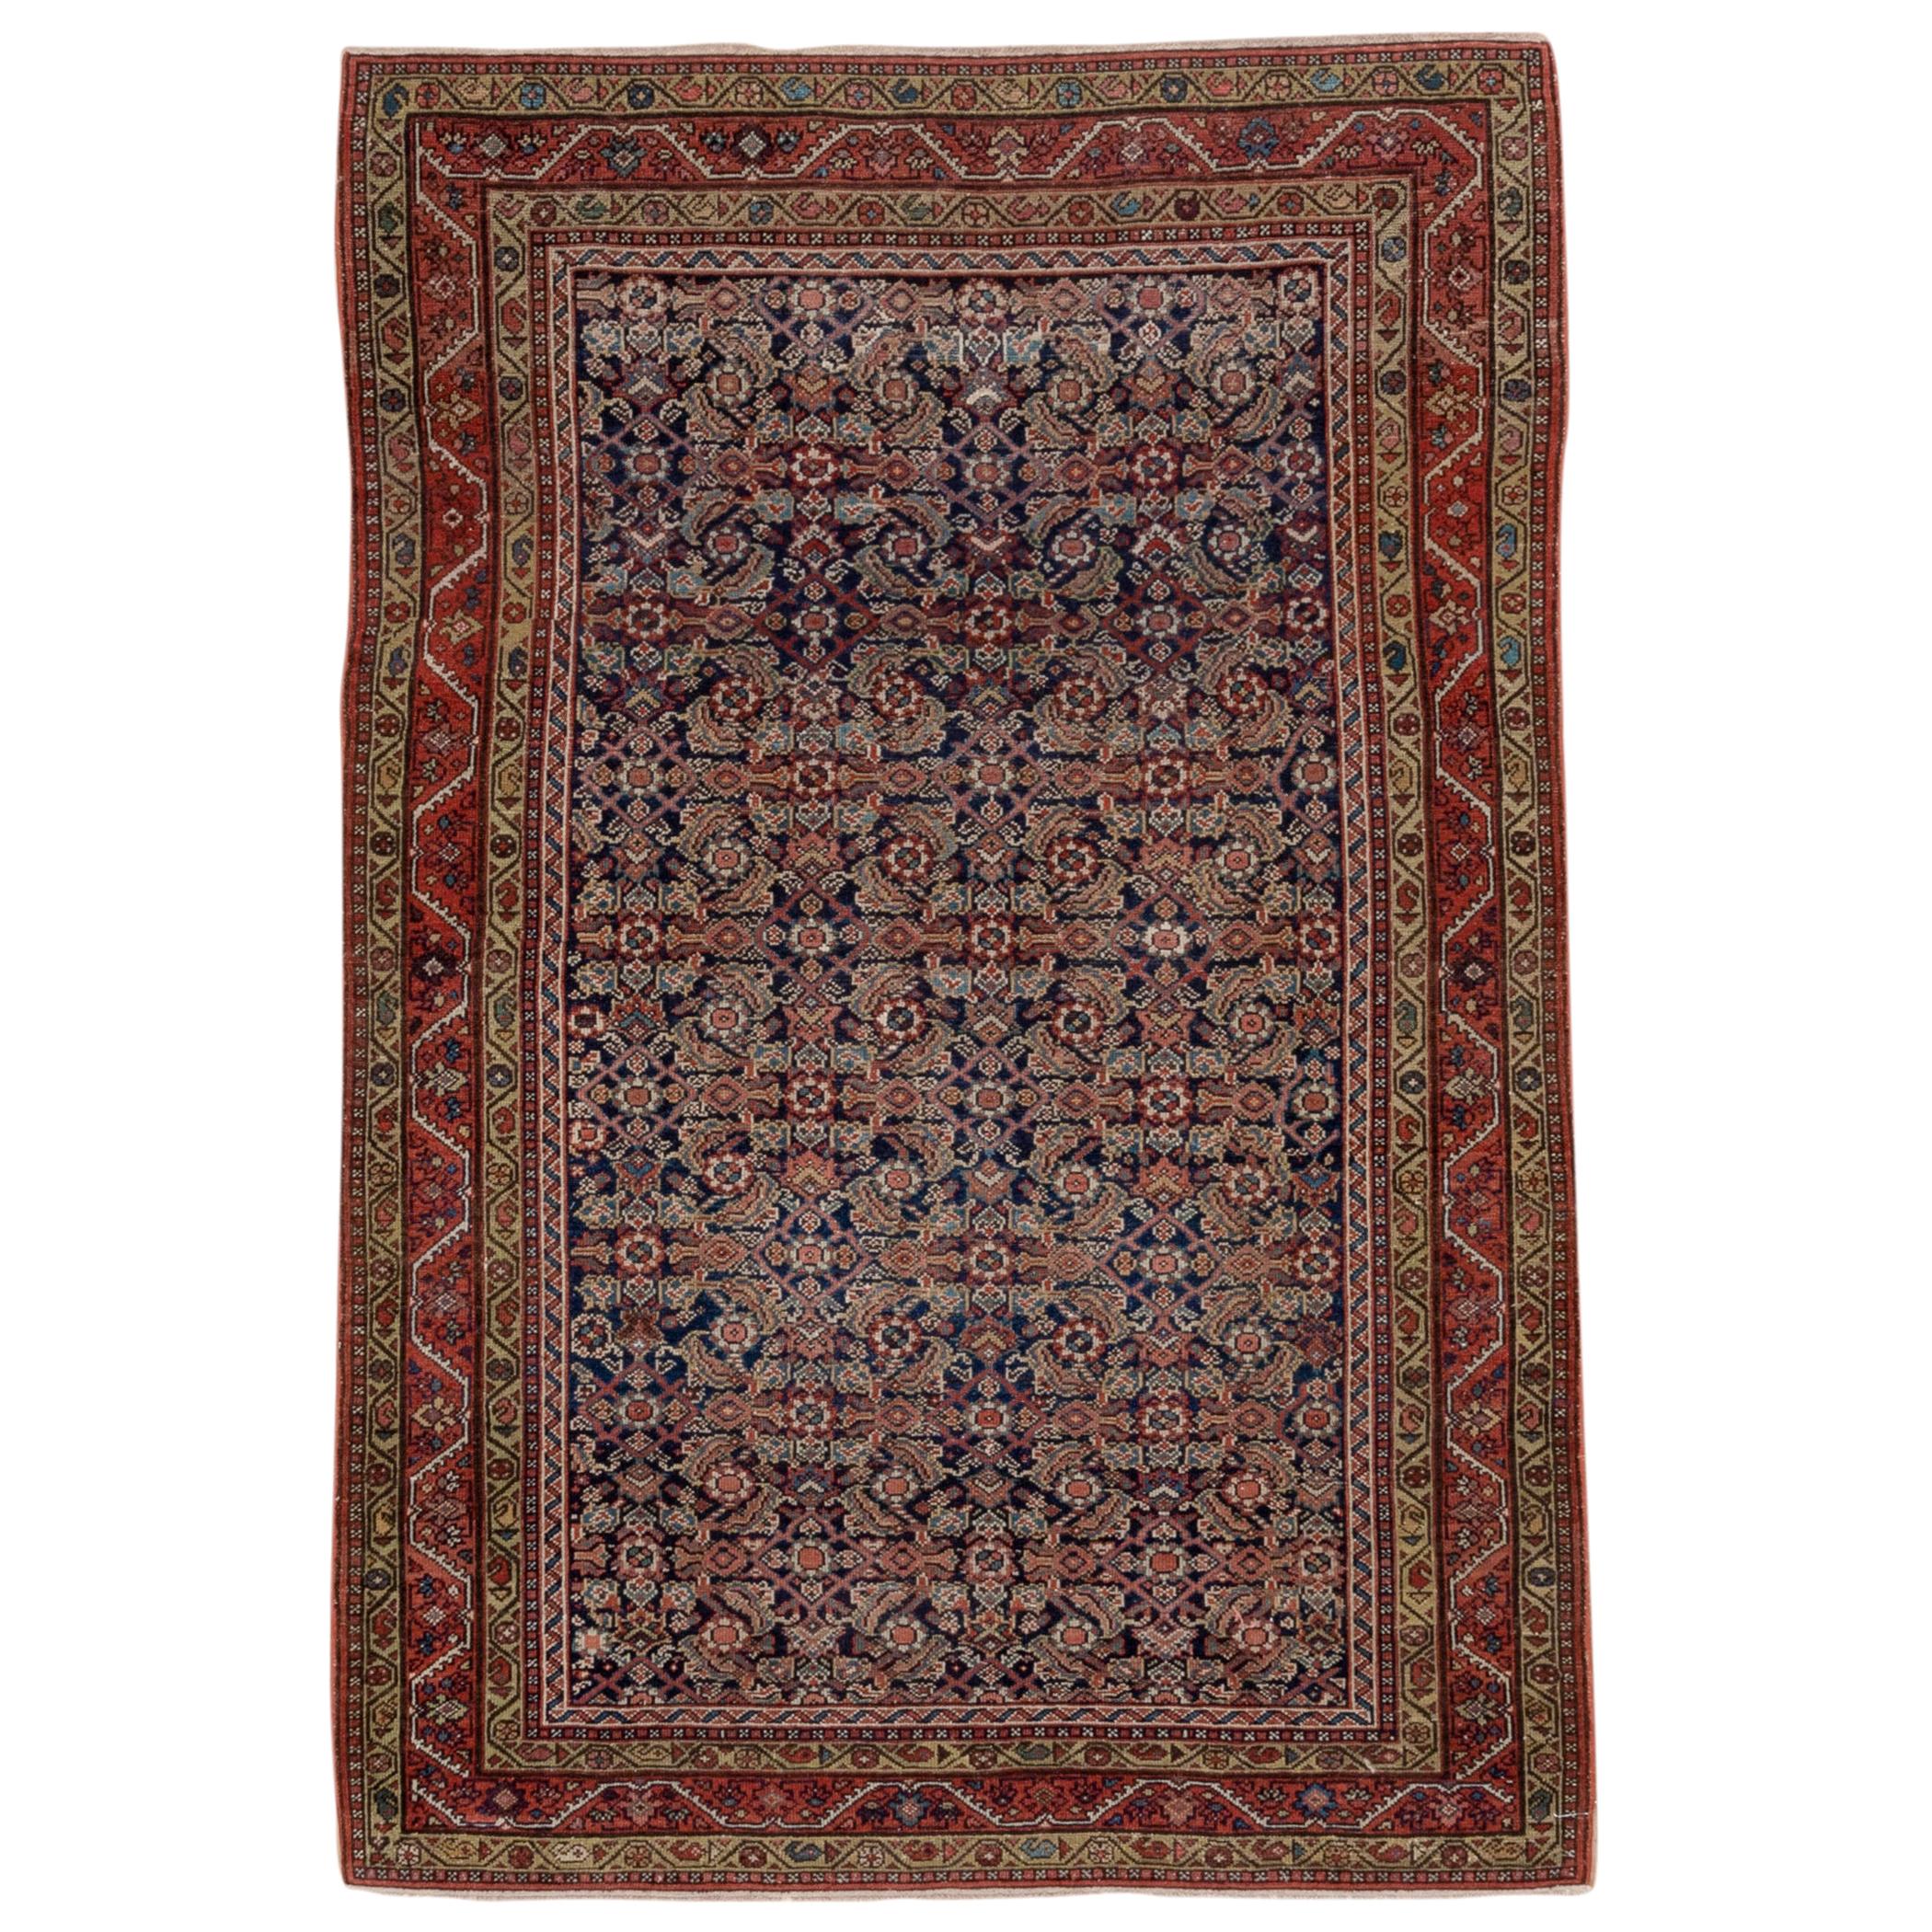 Antique Persian Malayer Rug, circa 1910s, Excellent Colors